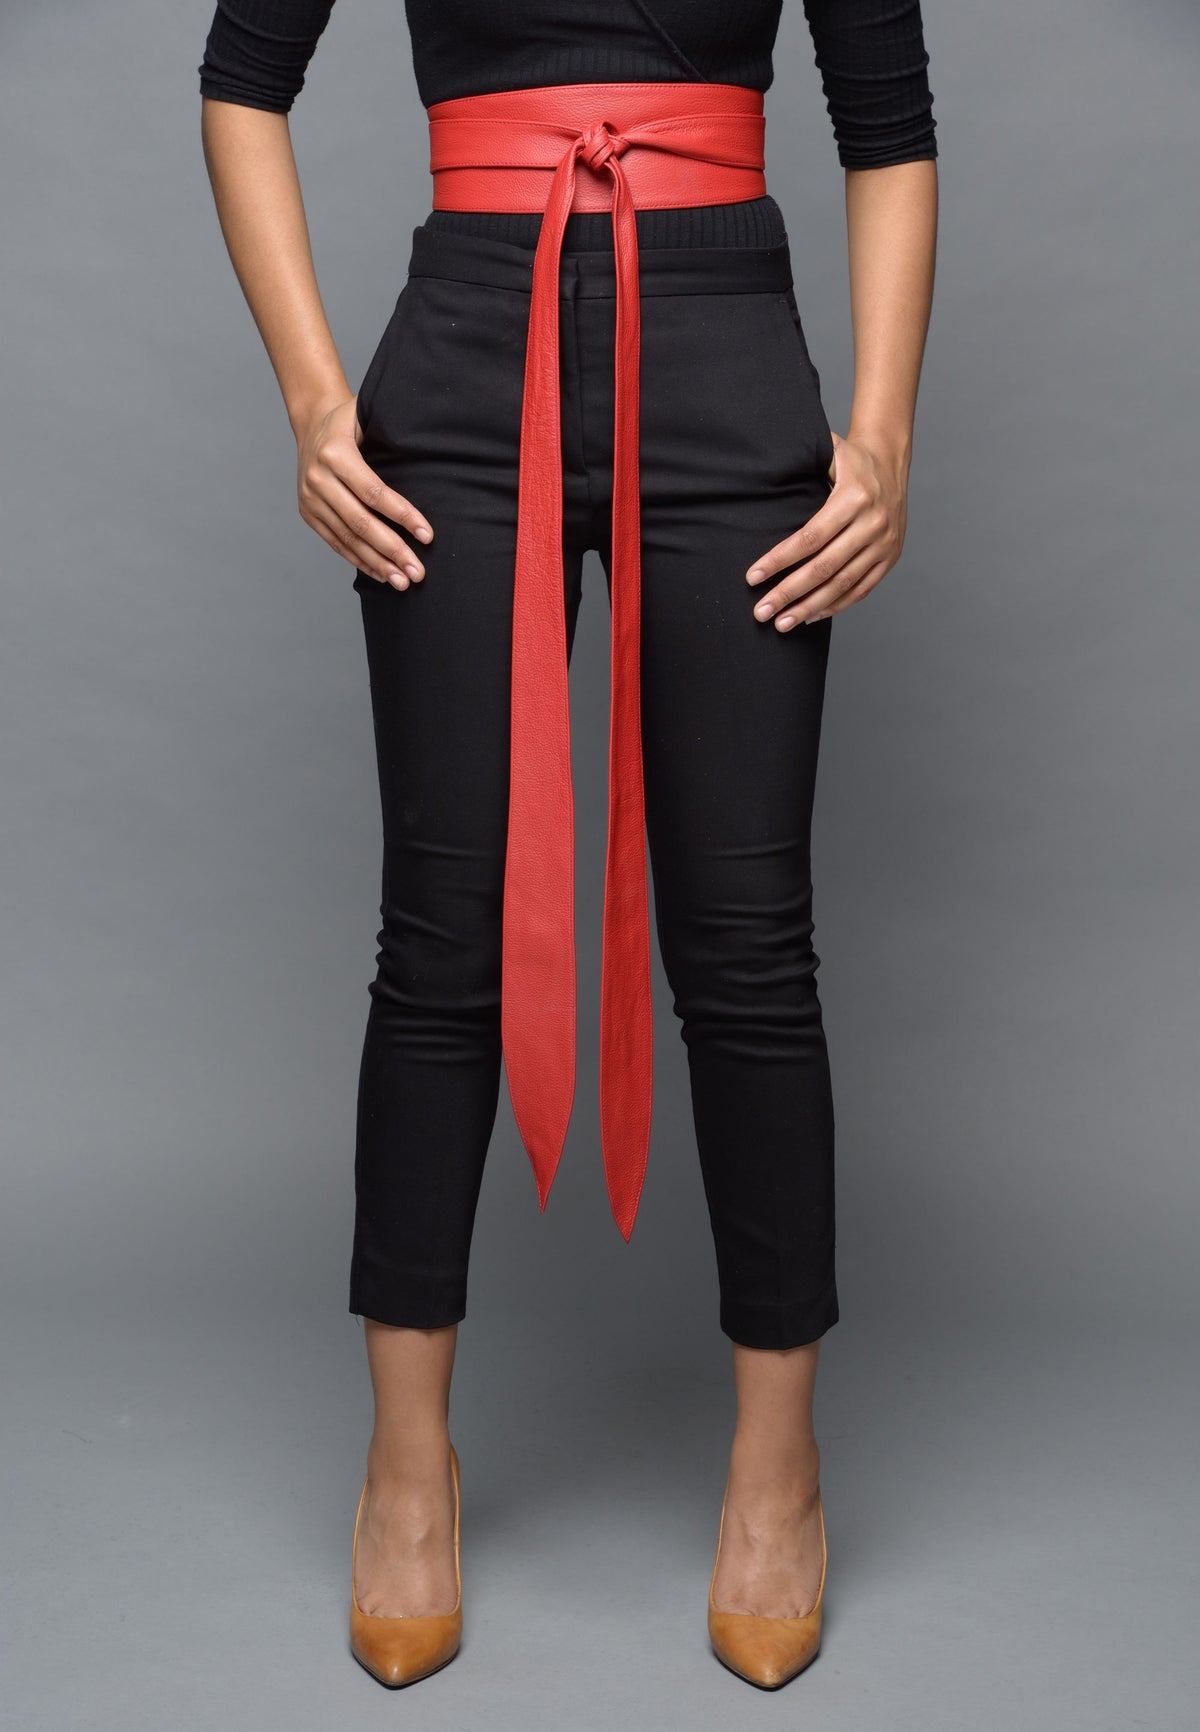 Obi Leather Wrap Belts - Red Leather Obi Belt – nyagua